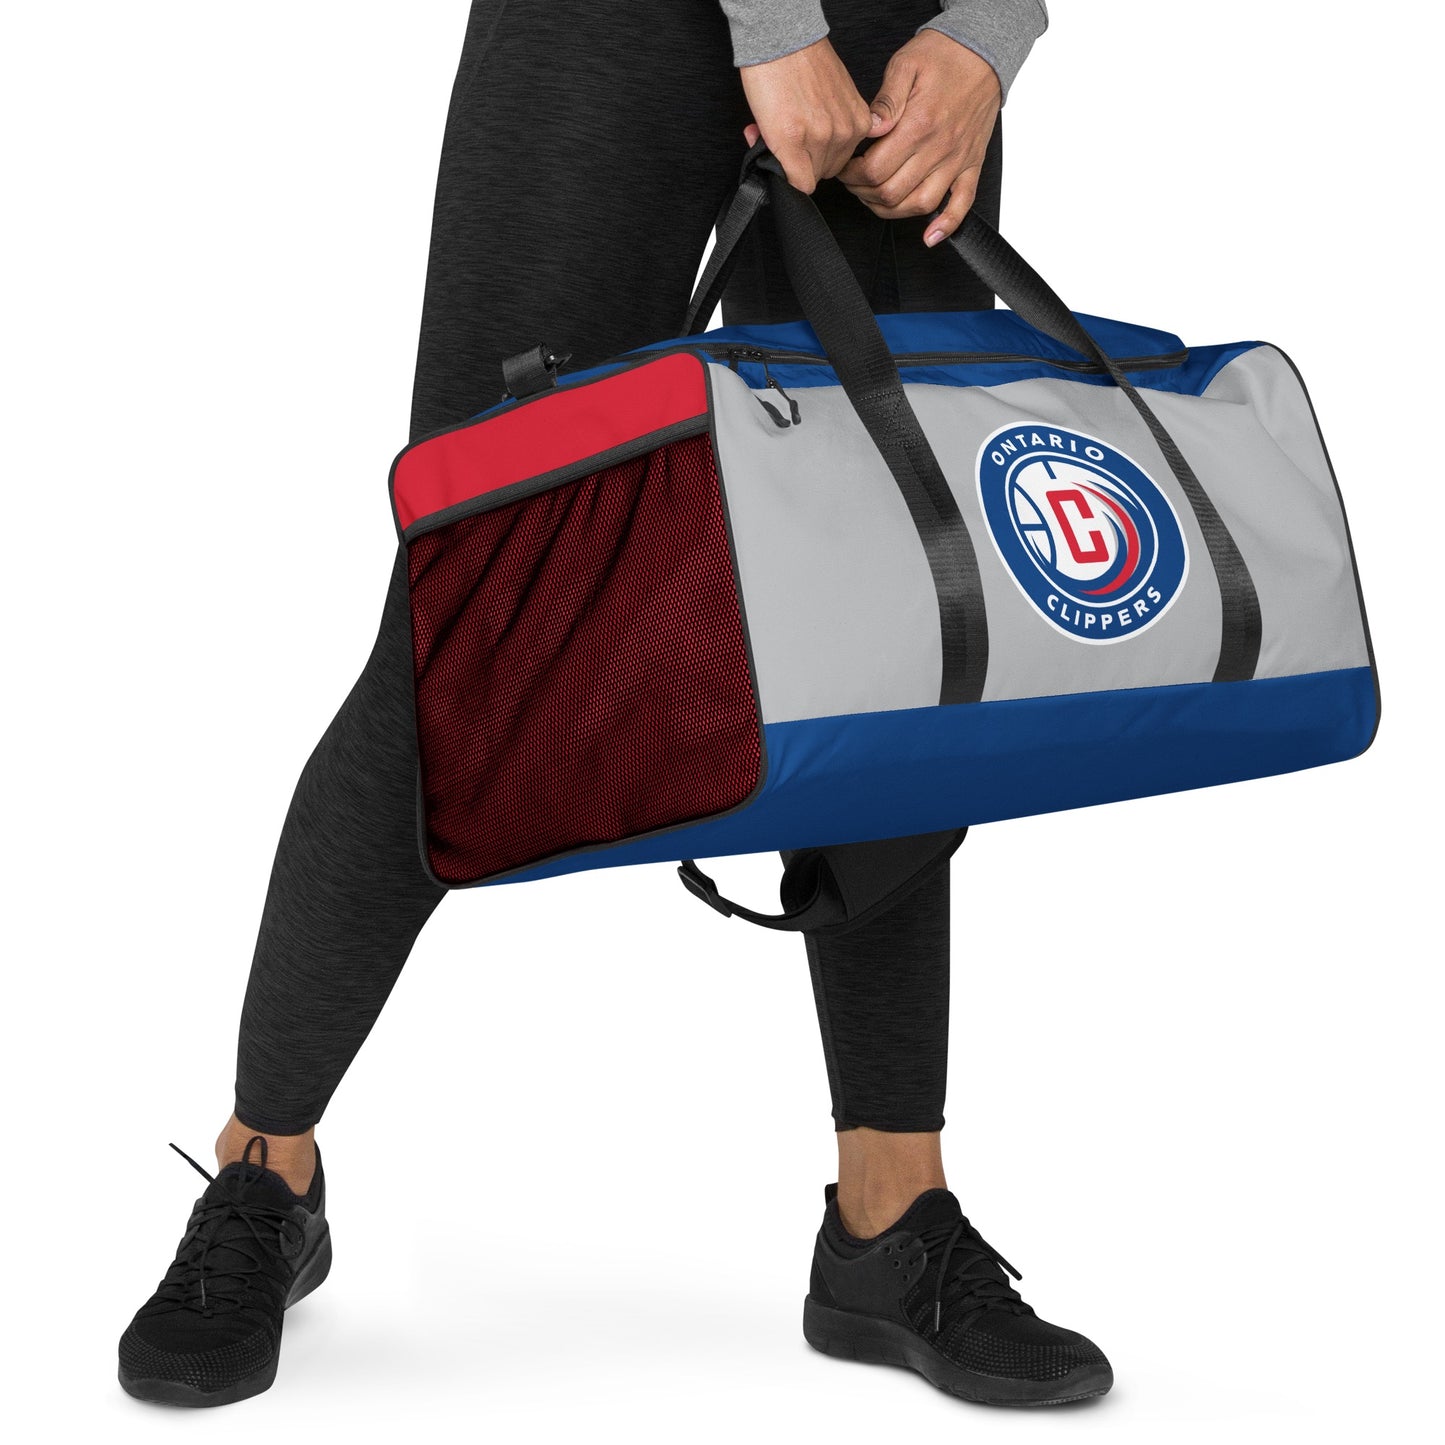 NBA G League Ontario Clippers Circle Duffle Bag